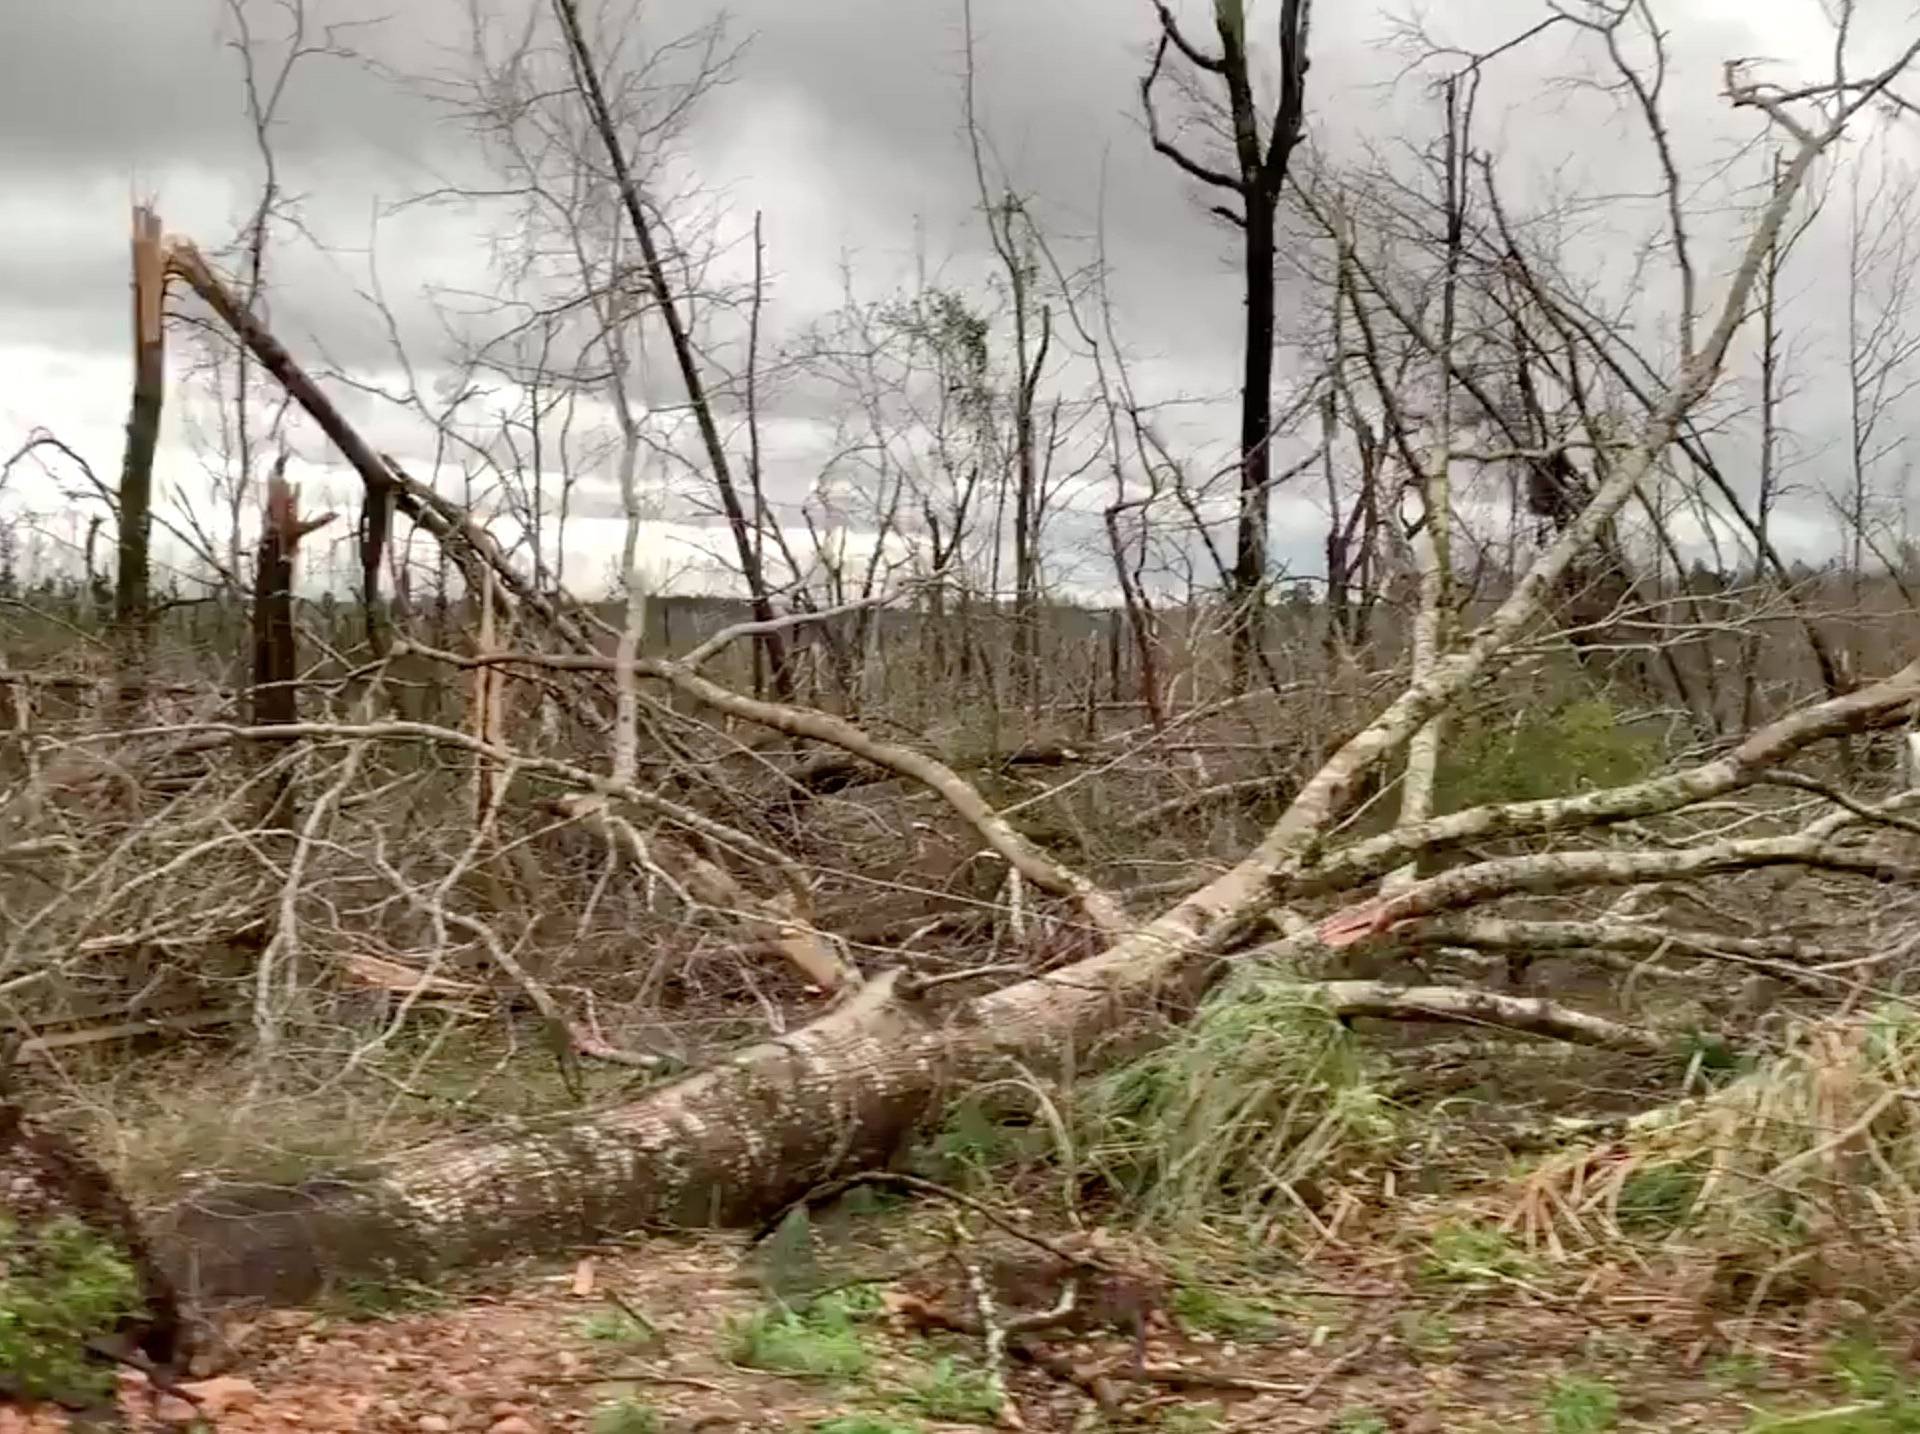 Fallen trees seen following a tornado in Beauregard, Alabama, U.S. in this March 3, 2019 still image obtained from social media video.